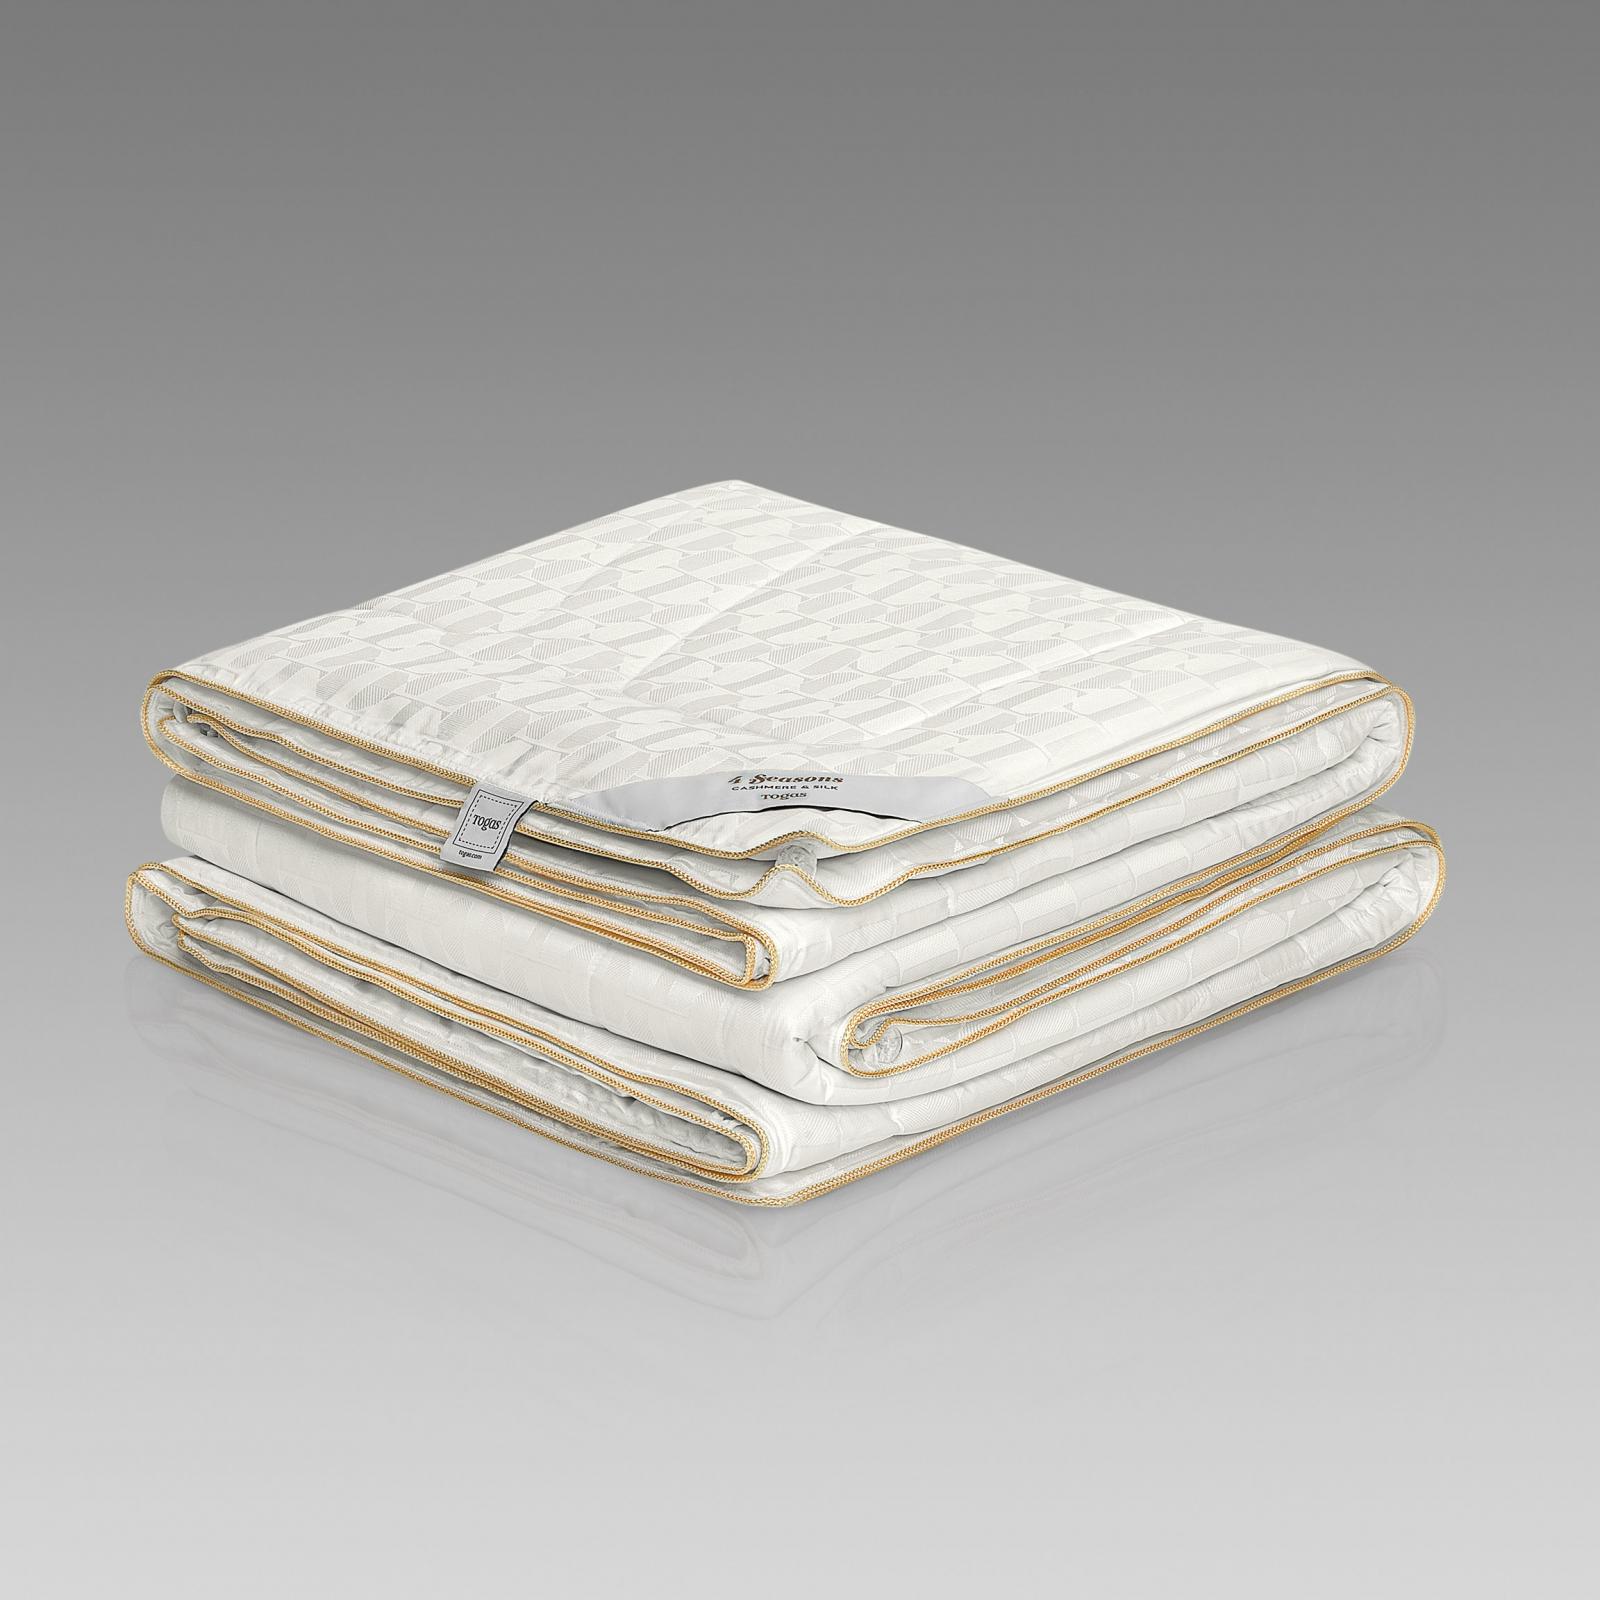 Одеяло Togas 4 сезона белое 140х200 см (20.04.40.0000) одеяло marc anri barr белое 140х200 см ma dc